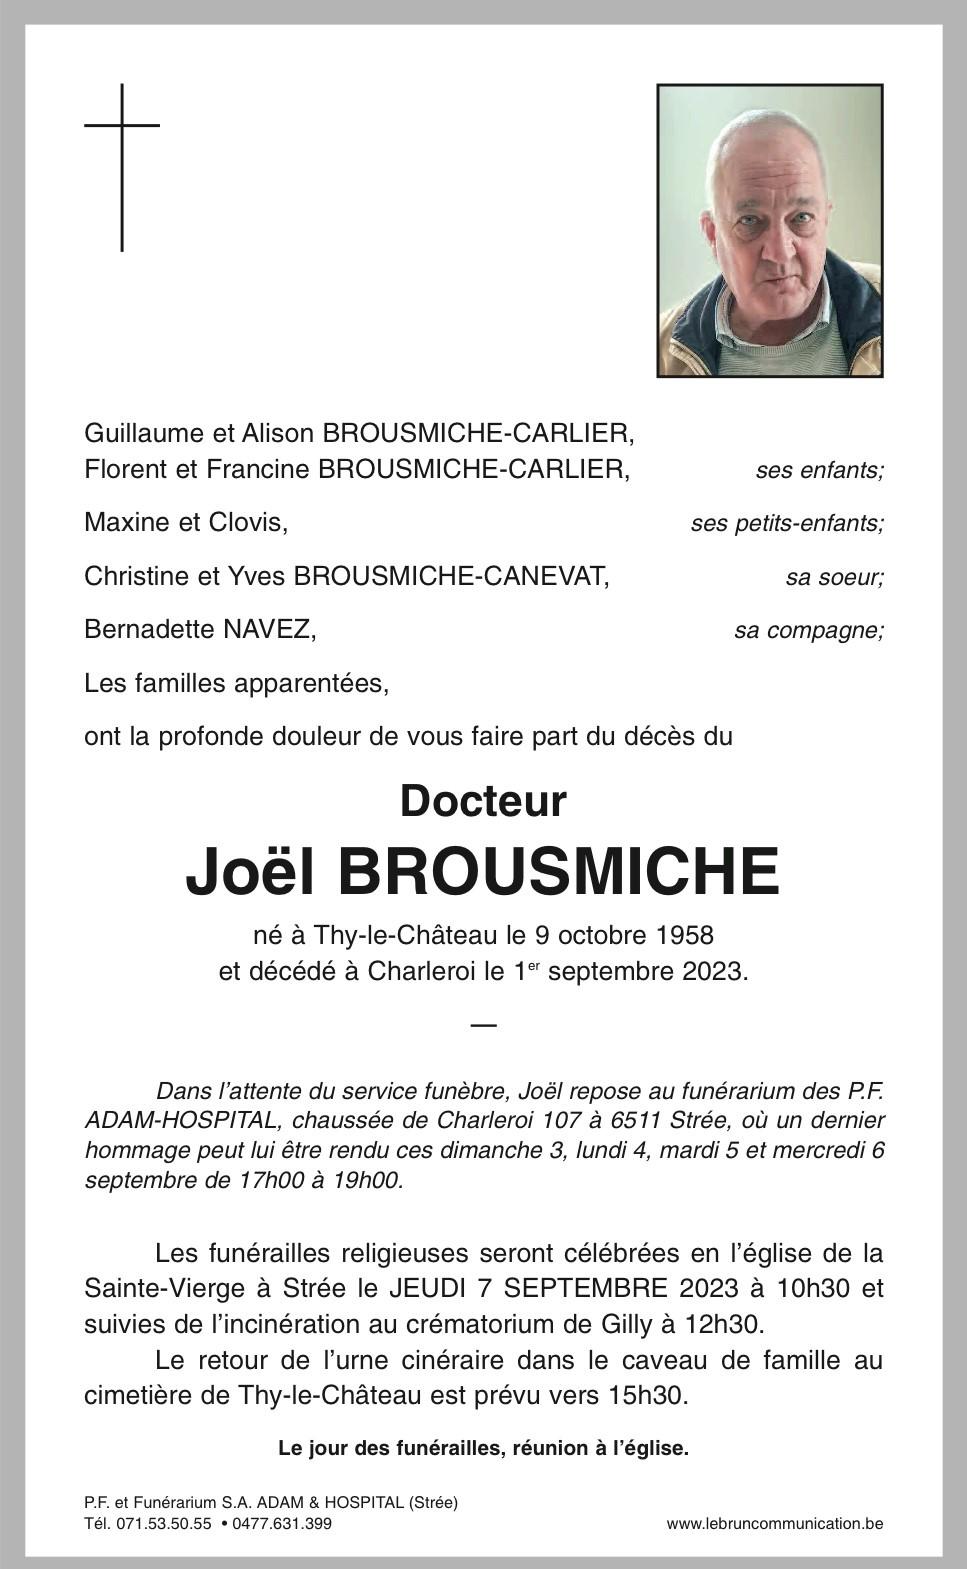 Joel Brousmiche | Funérailles Adam Hospital